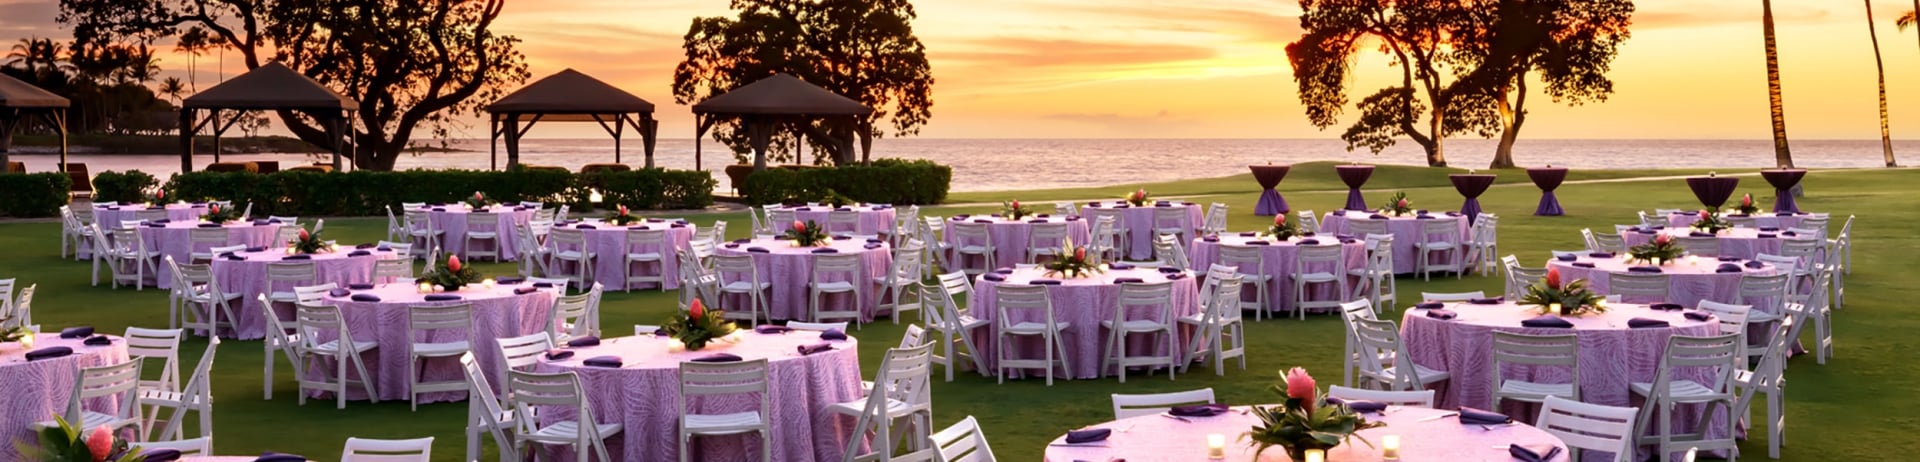 Best Meetings & Events Venues Hawaiʻi | Fairmont Orchid